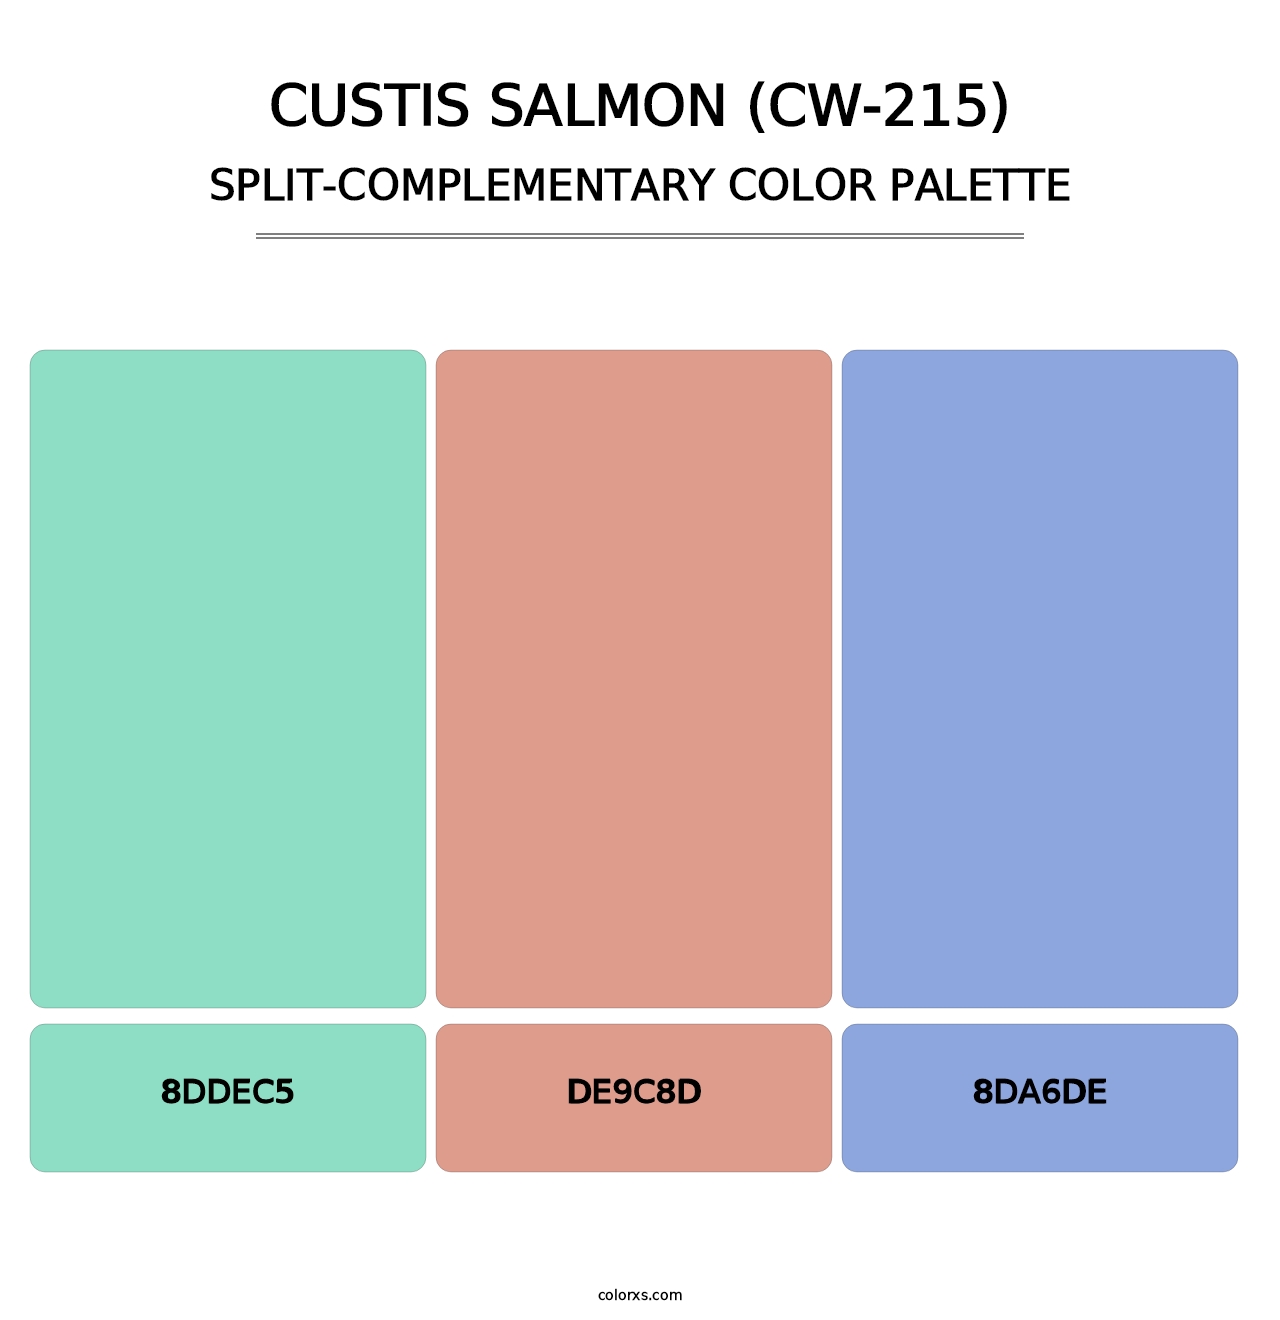 Custis Salmon (CW-215) - Split-Complementary Color Palette